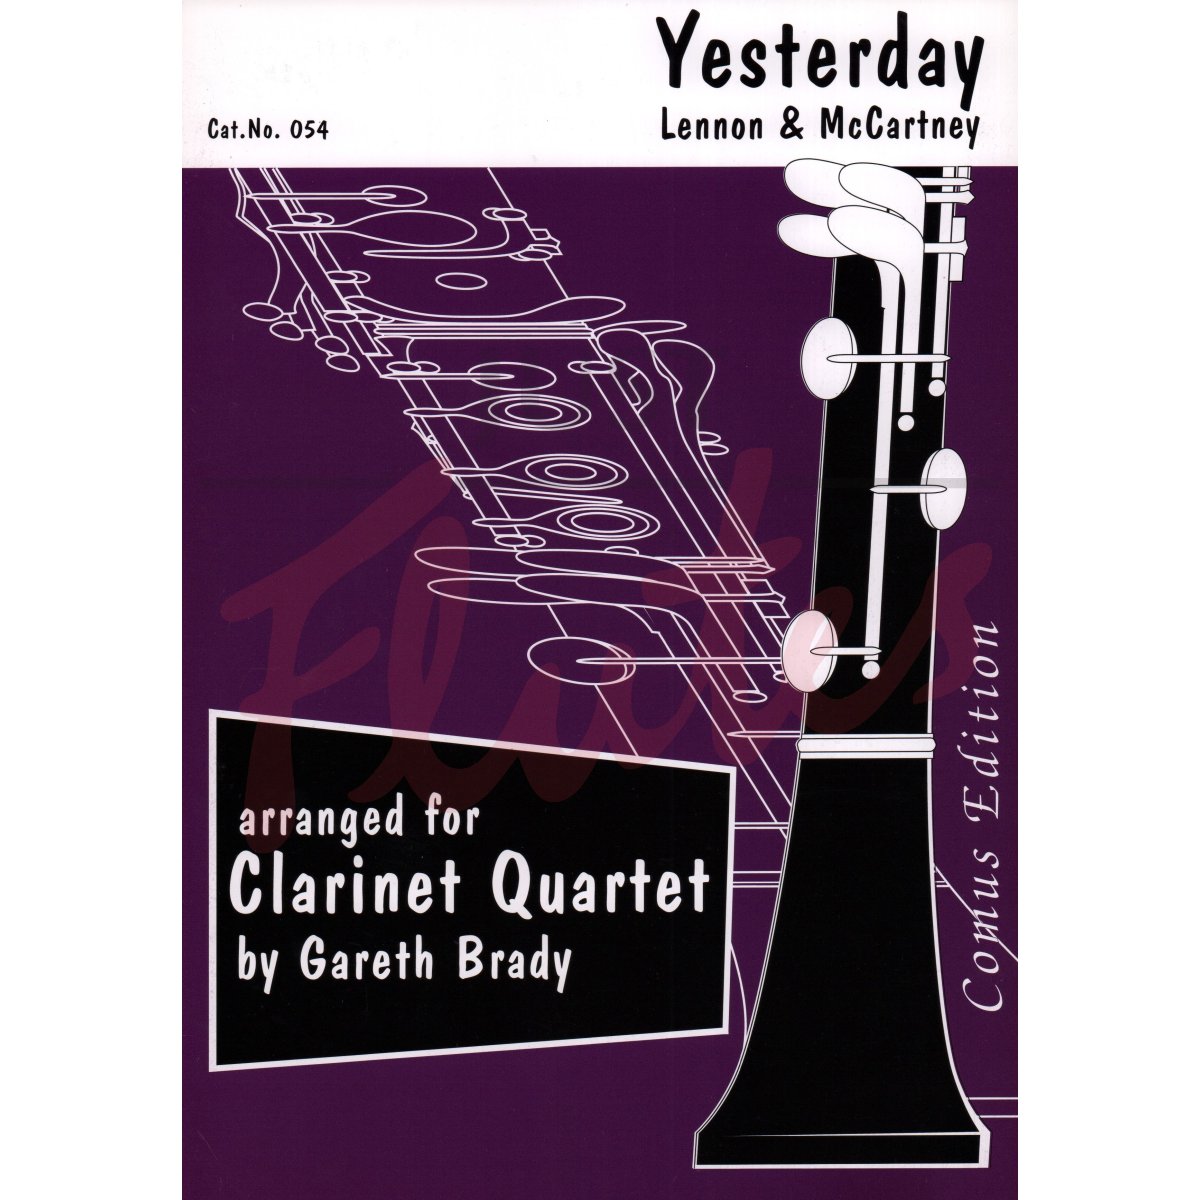 Yesterday for Clarinet Quartet